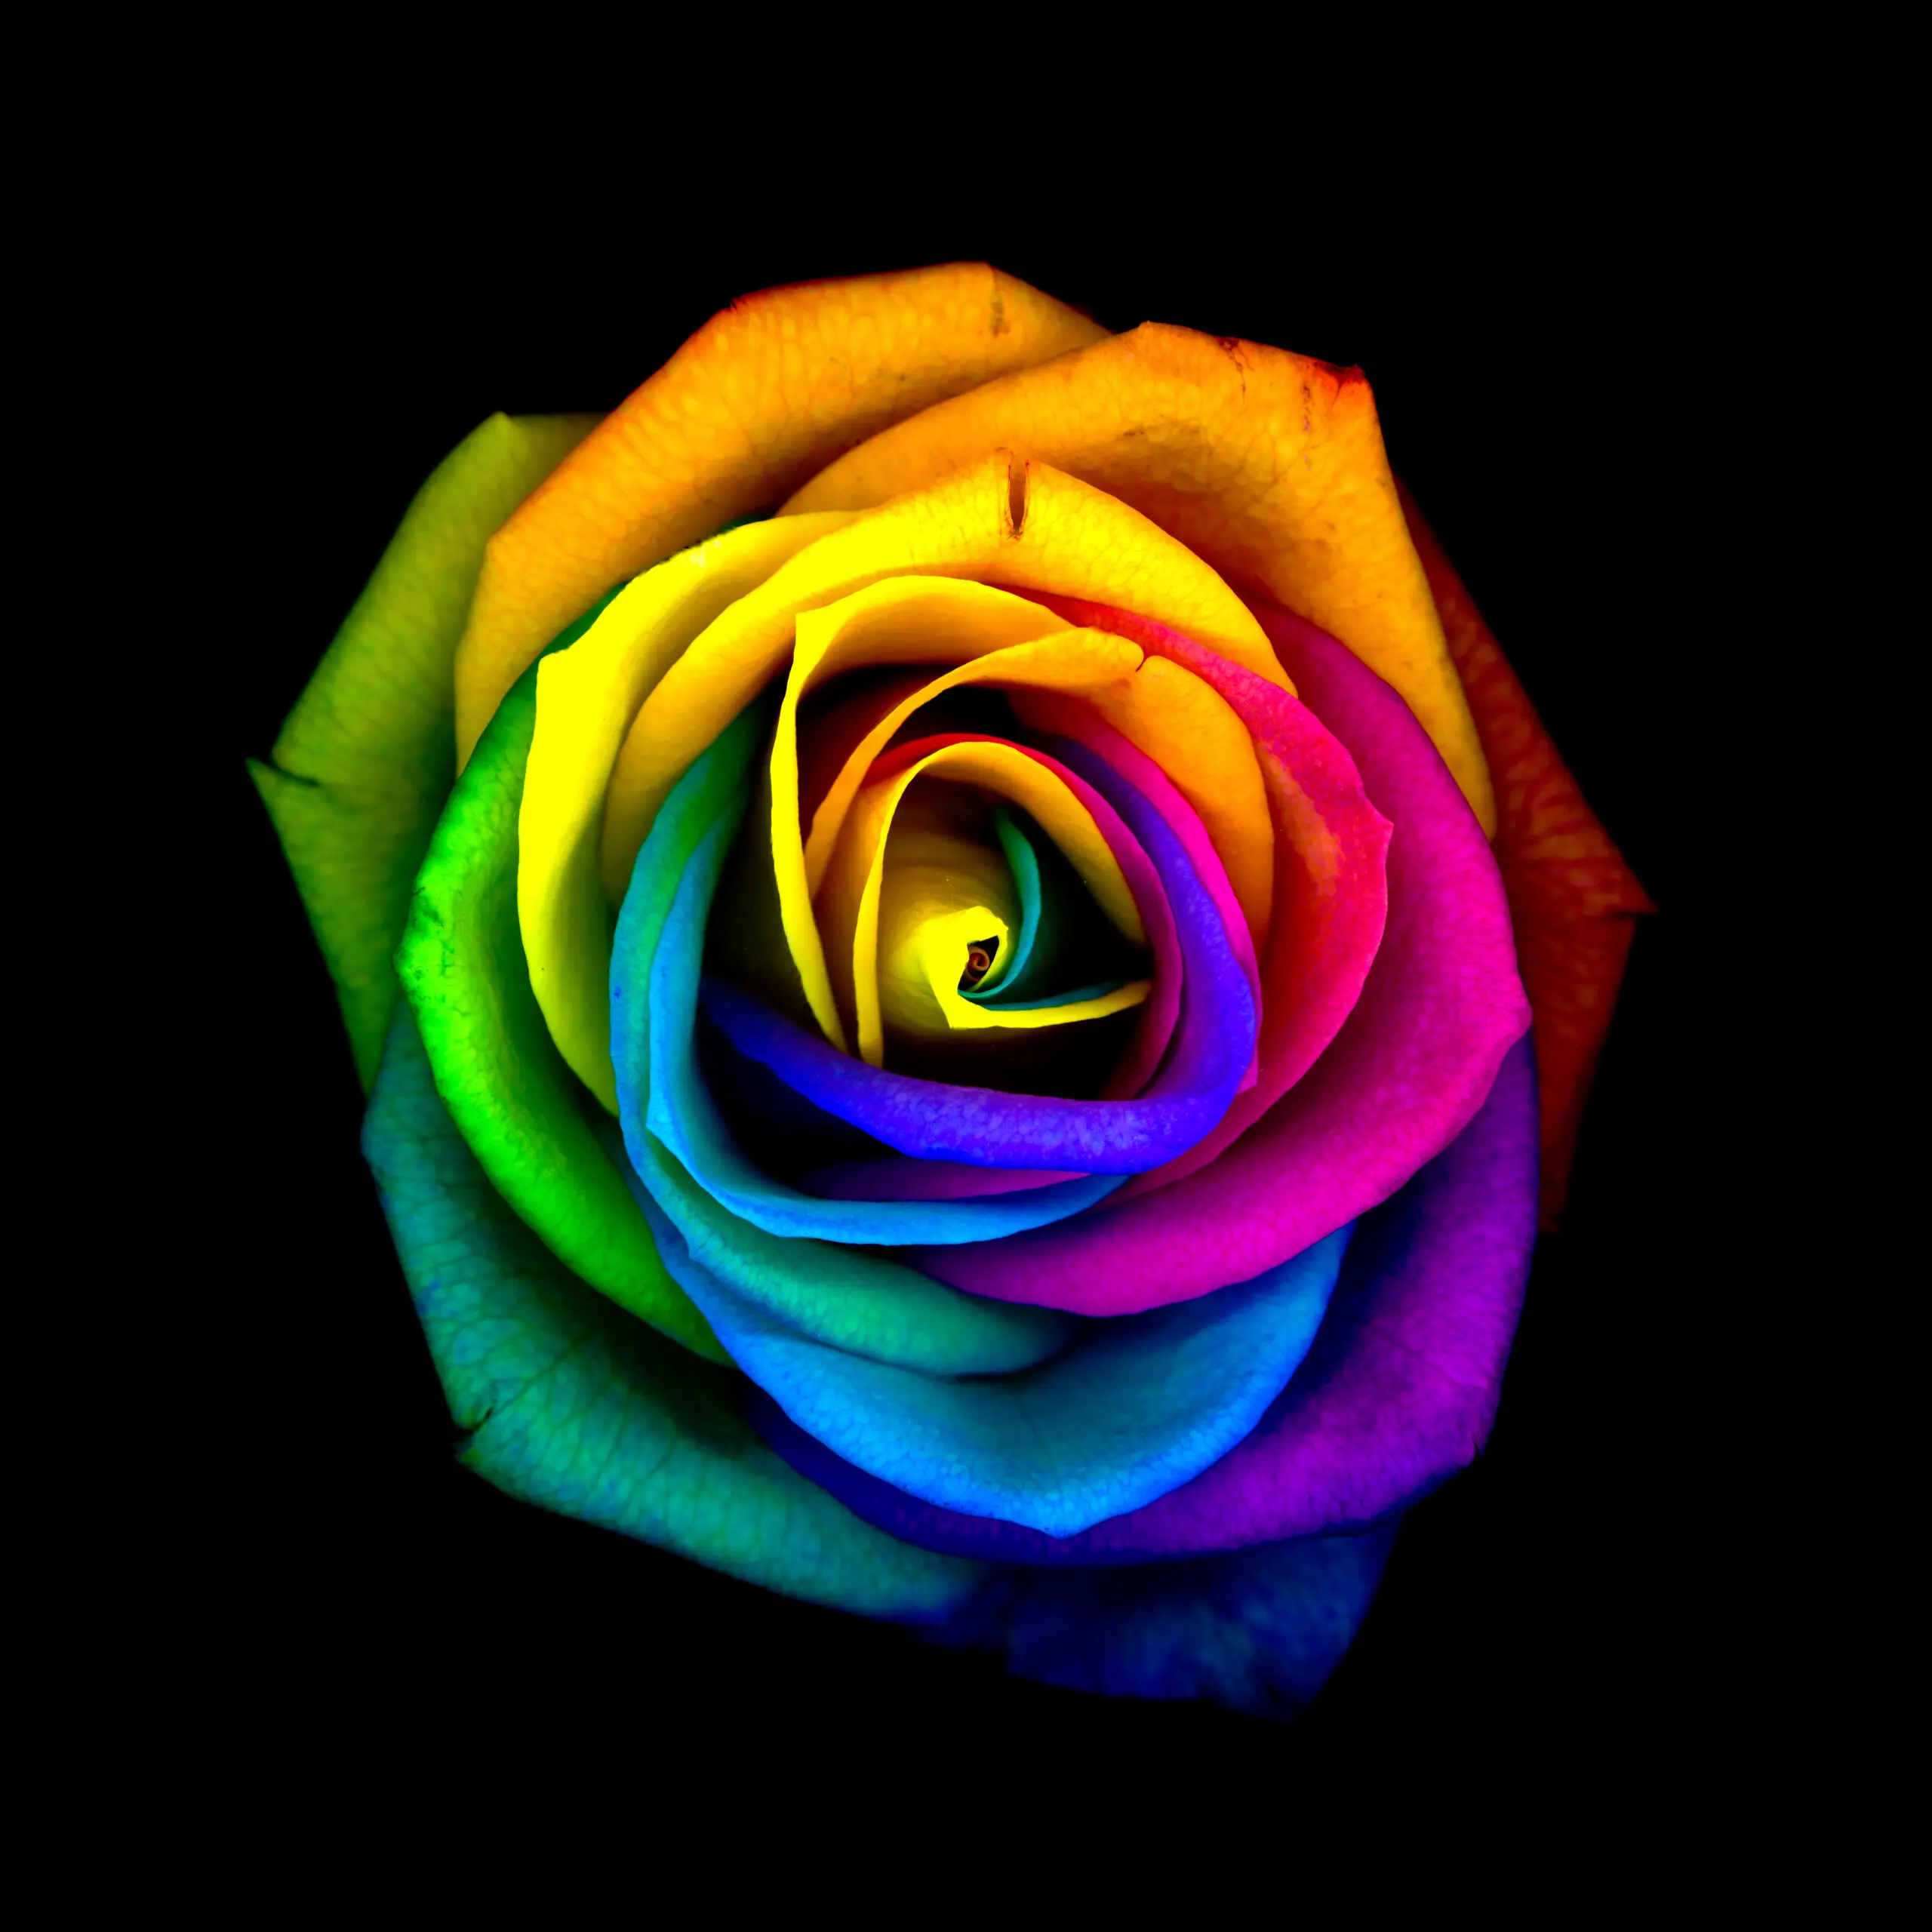 Wandbild (6095) Rainbow rose by Nicklas Berglin, 1x.com präsentiert: Stillleben,Kreatives,Natur,Blumen und Blüten,Makro,Floral,Sonstiges Kreatives